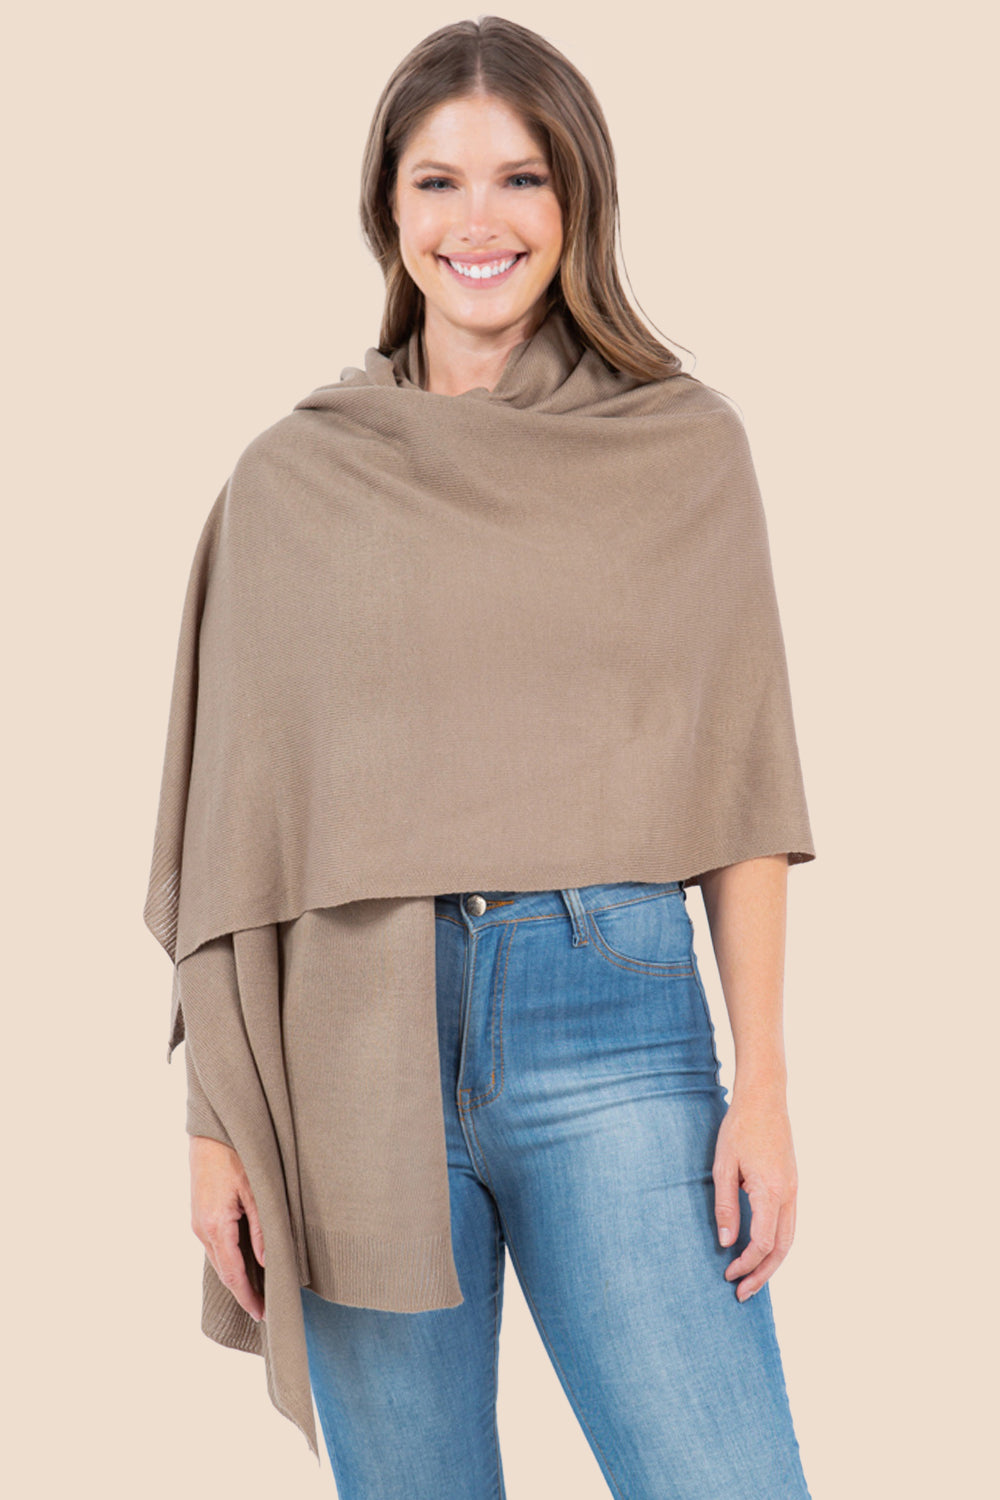 GAO-4249 solid color shawl